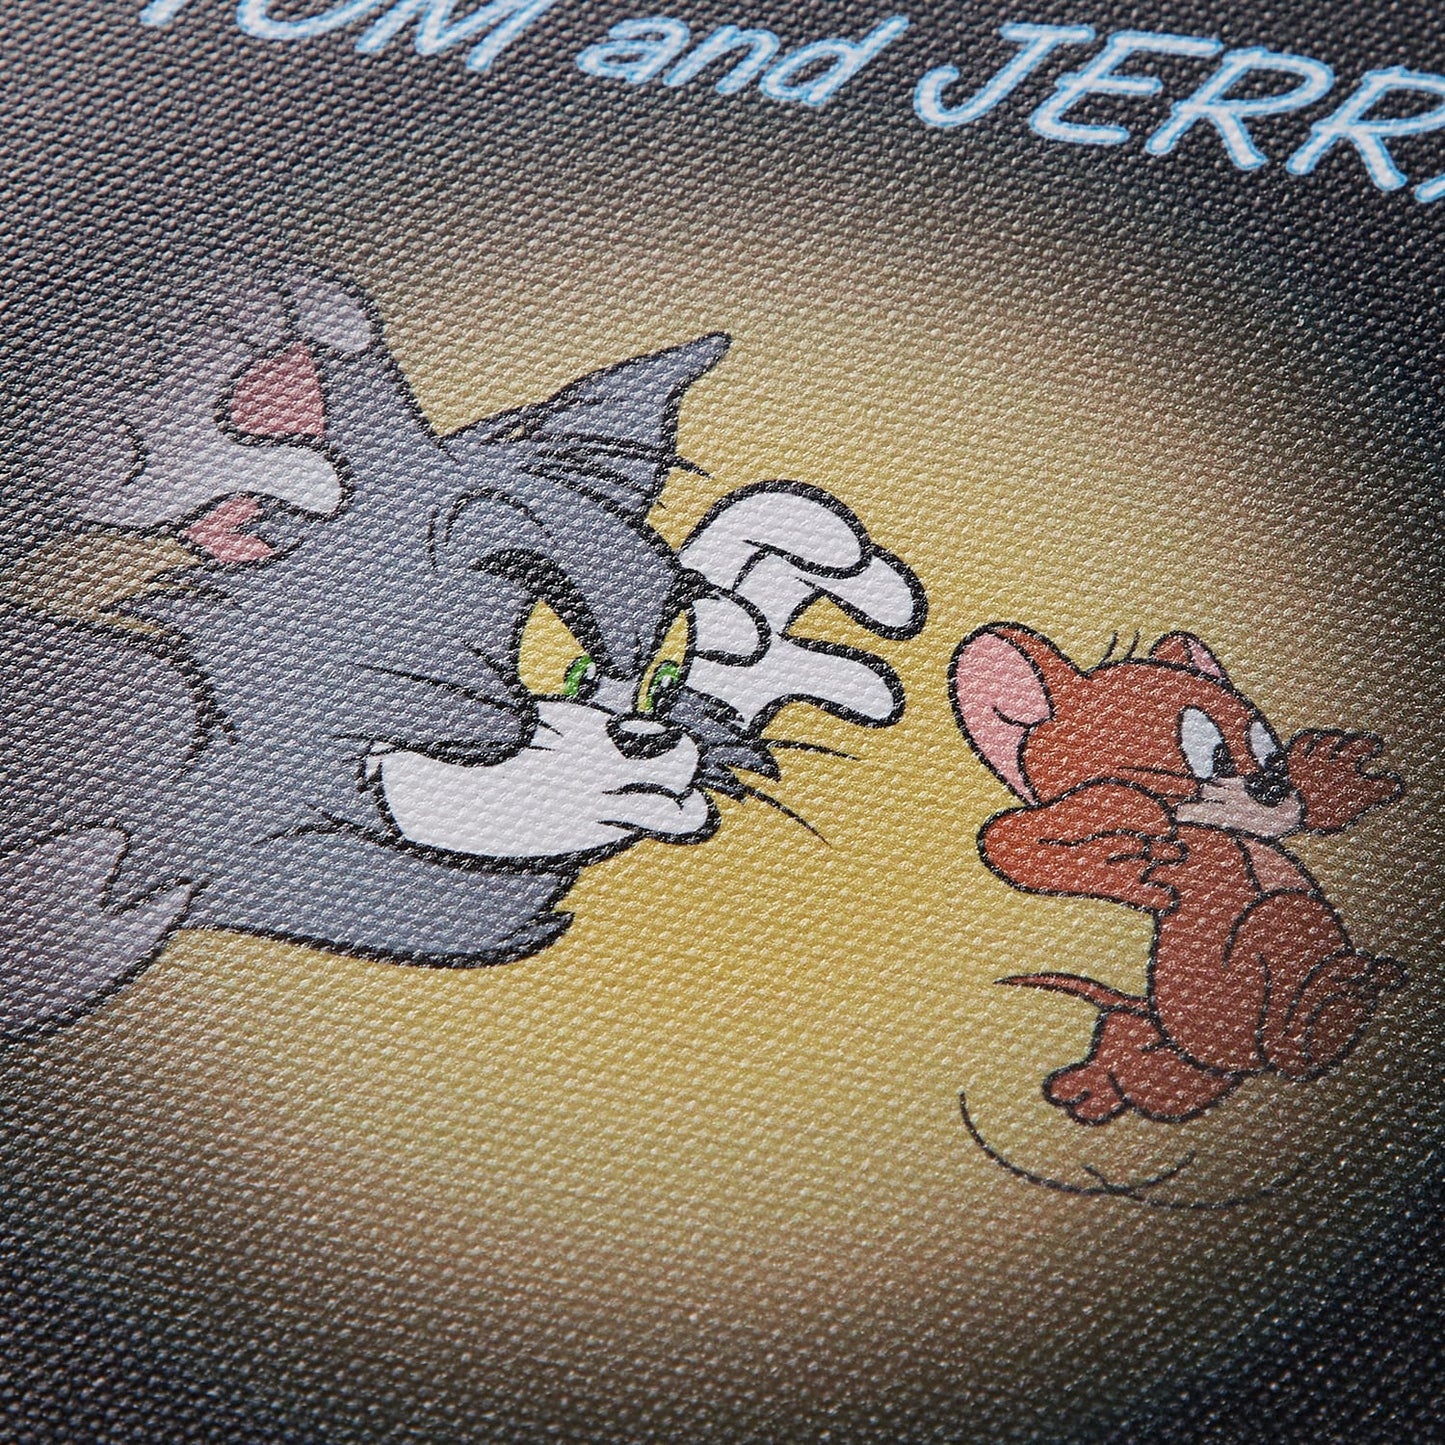 Tom&Jerry LED畫布擺設